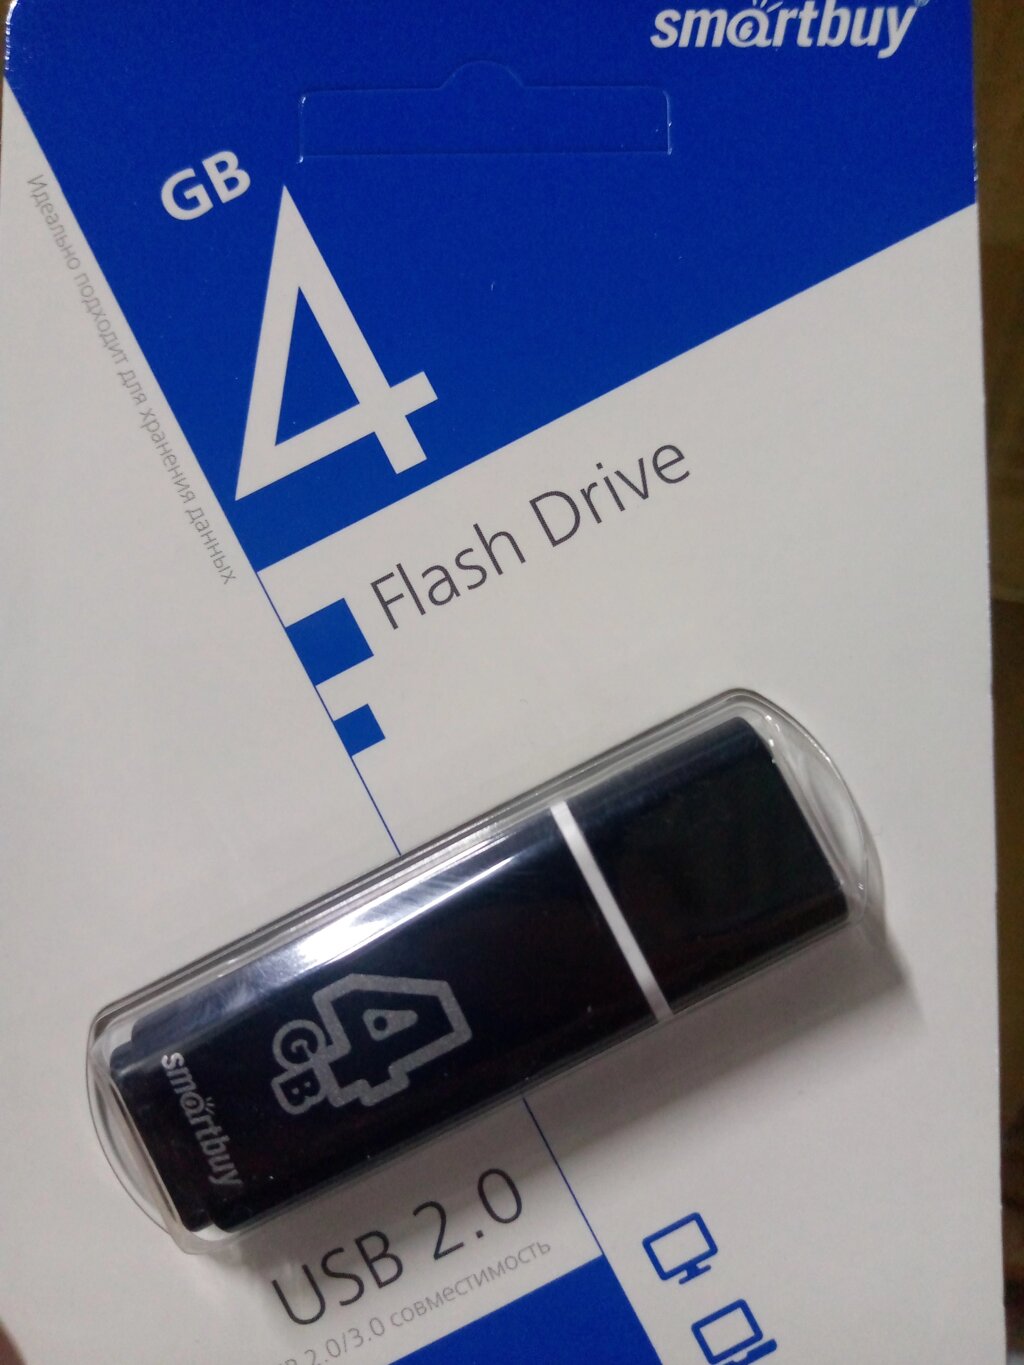 USB flash drive Smartbuy 4 gb glossy от компании ИП Флешки Алматы - фото 1